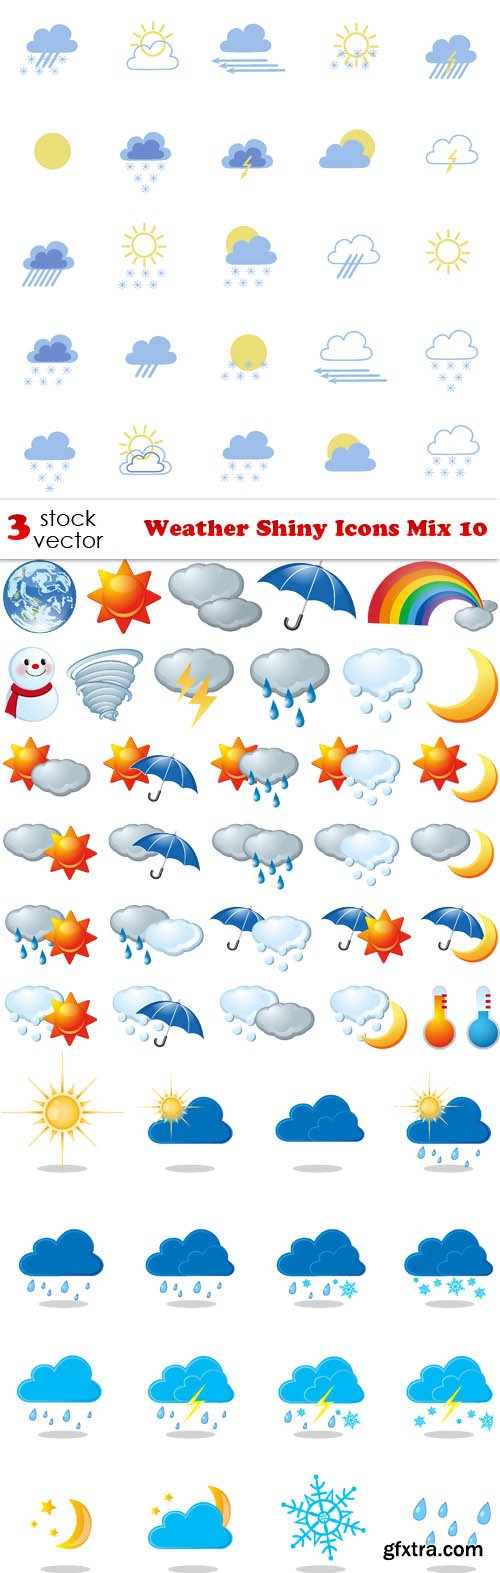 Vectors - Weather Shiny Icons Mix 10